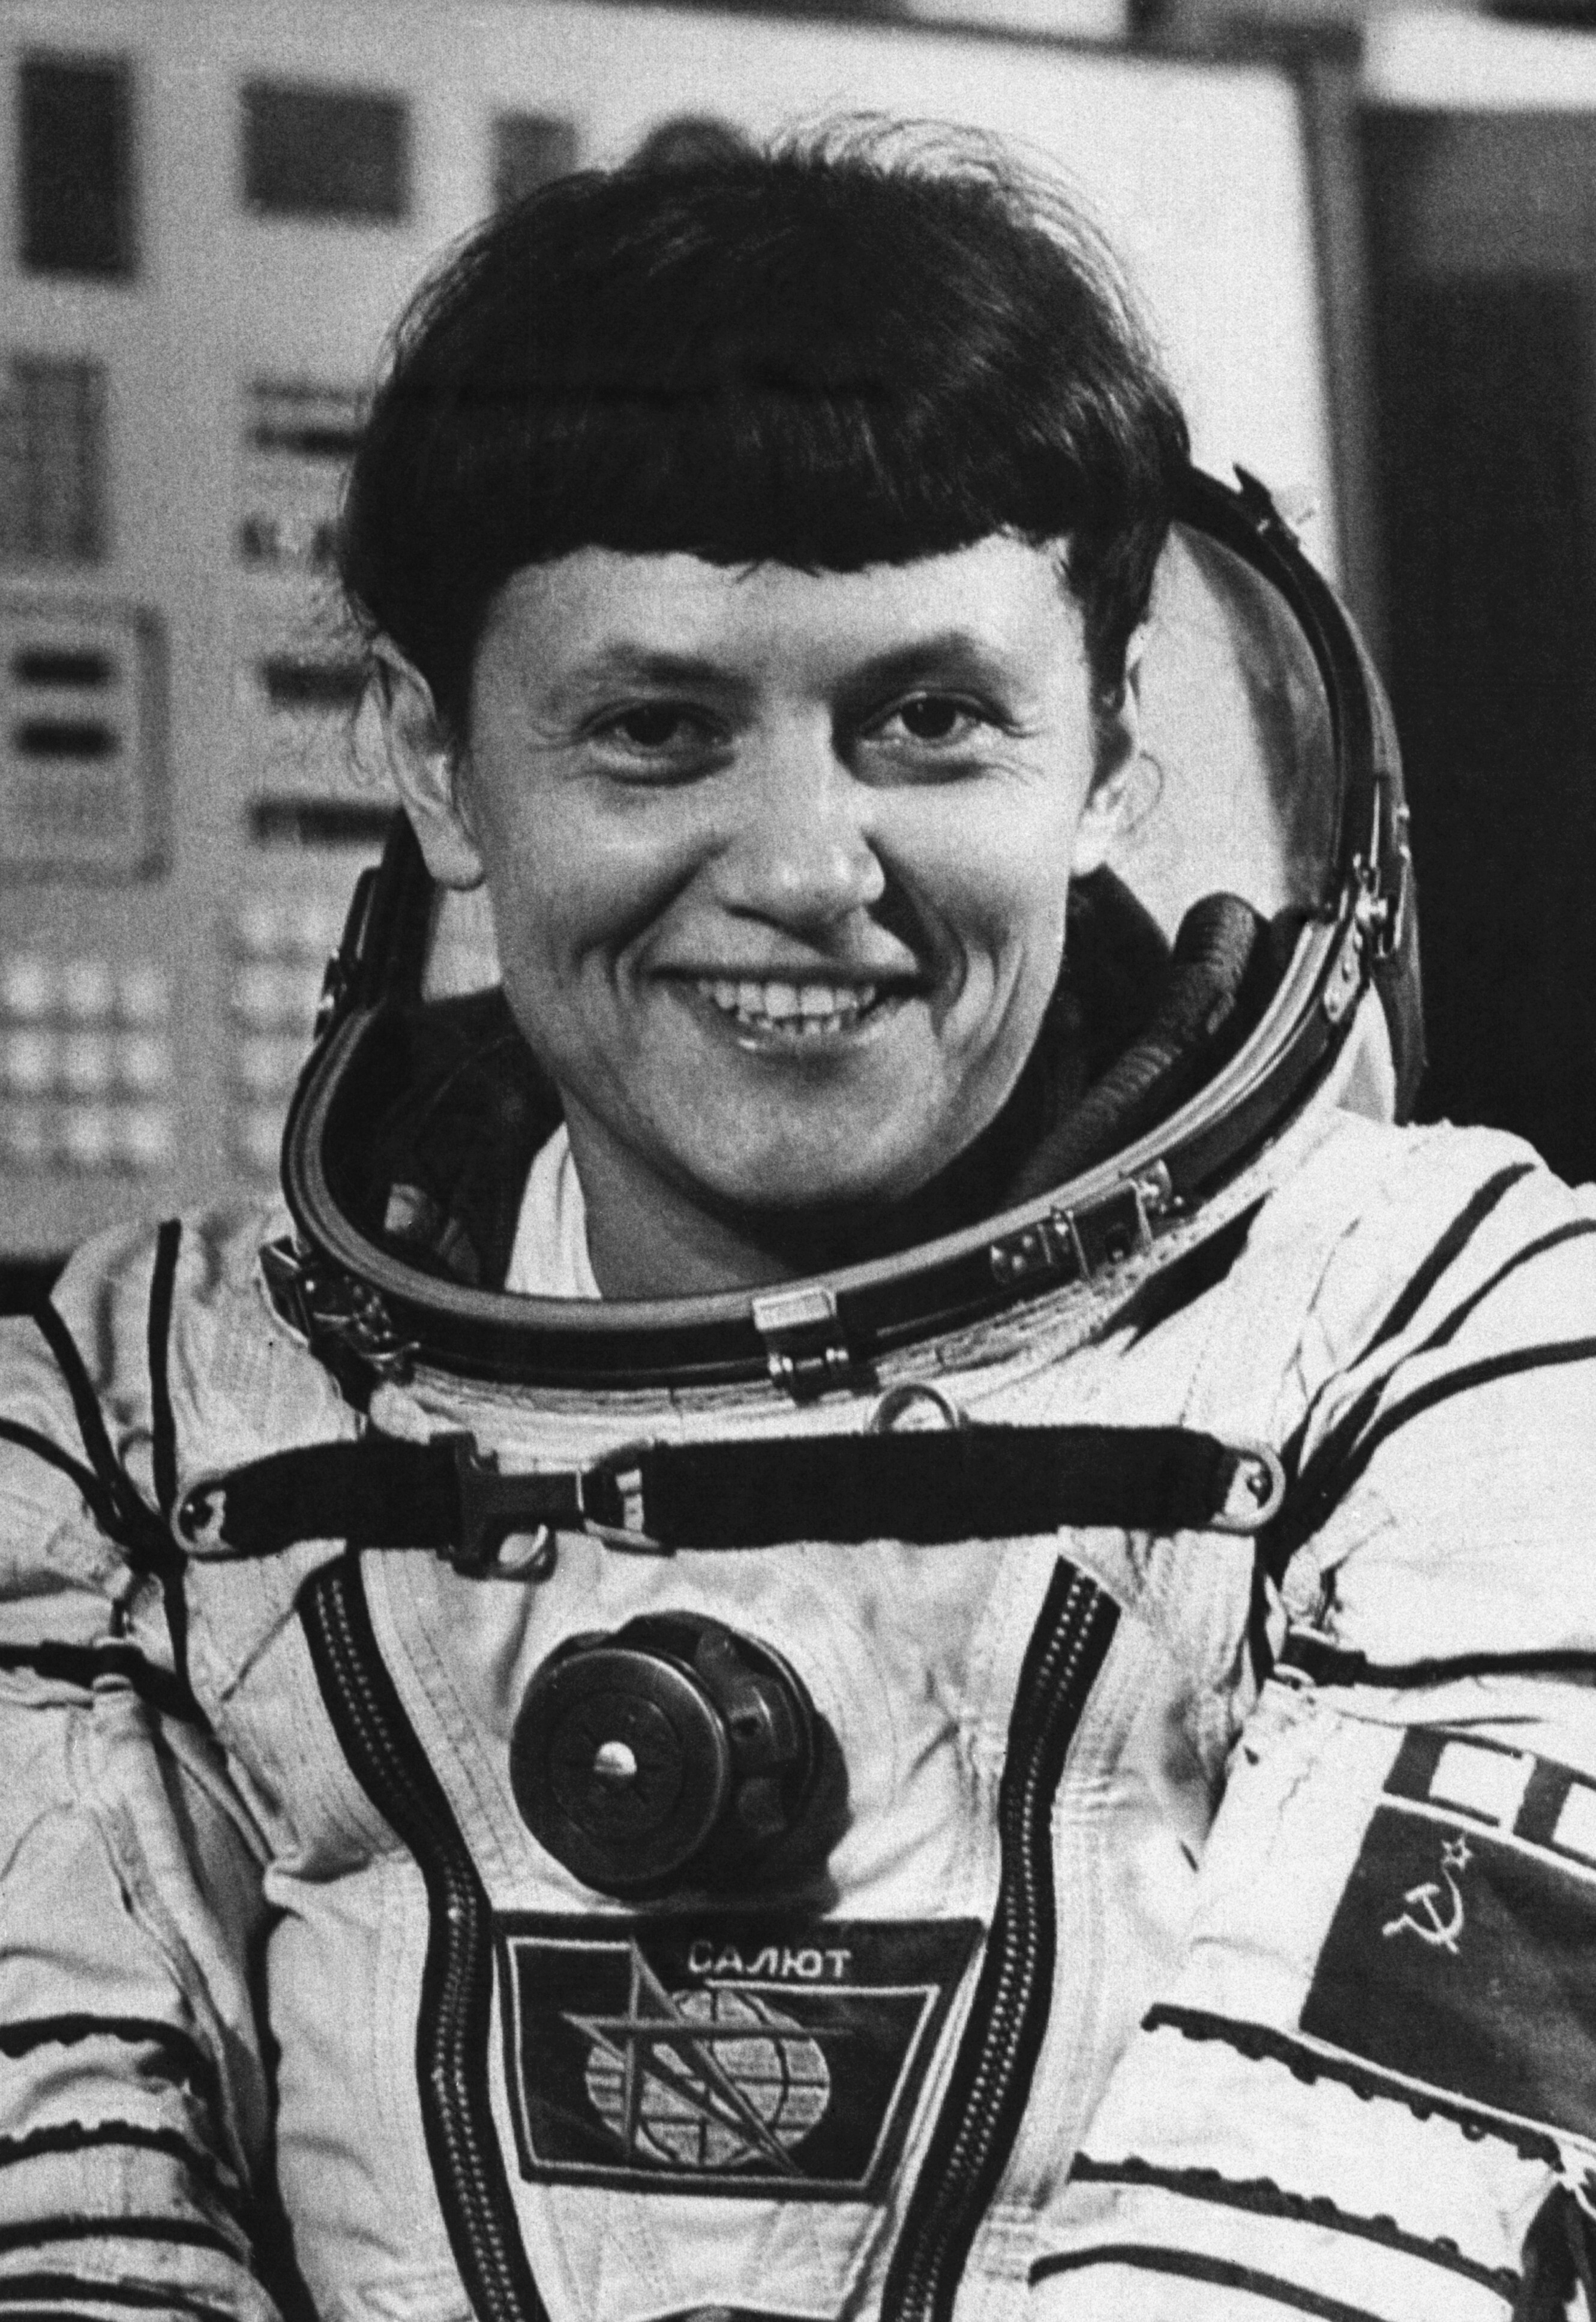 Soviet astronaut and researcher Svetlana Savitskaya was the first woman to walk in space in 1984. Photo: Bettman Archive